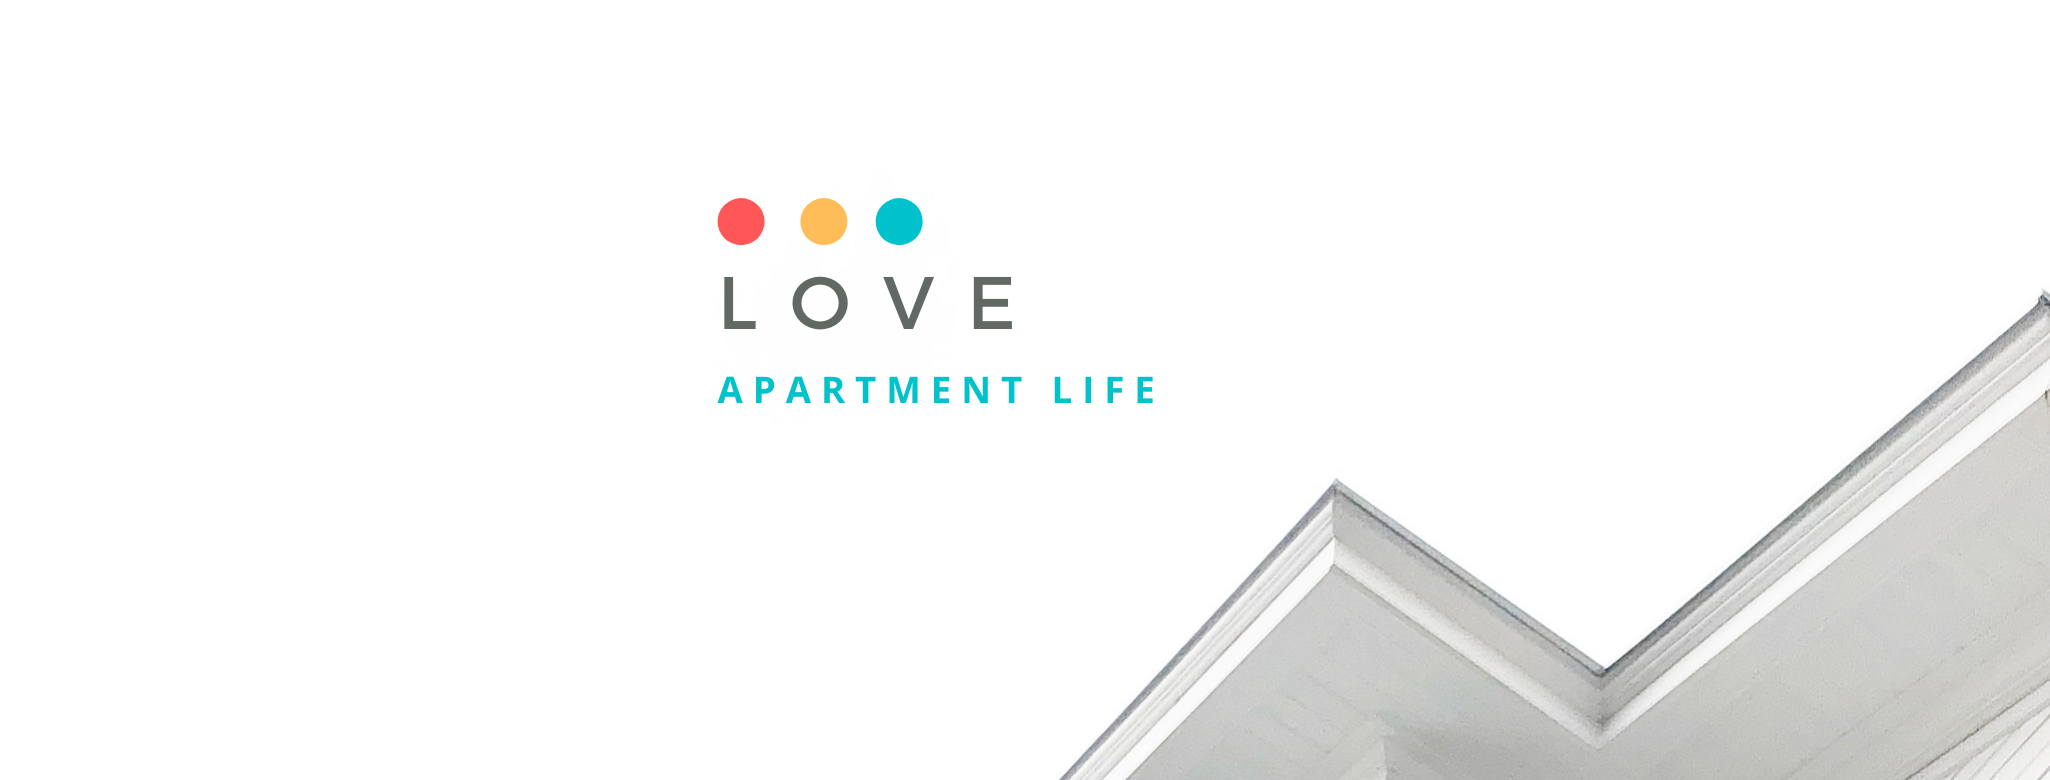 Love Apartment Life